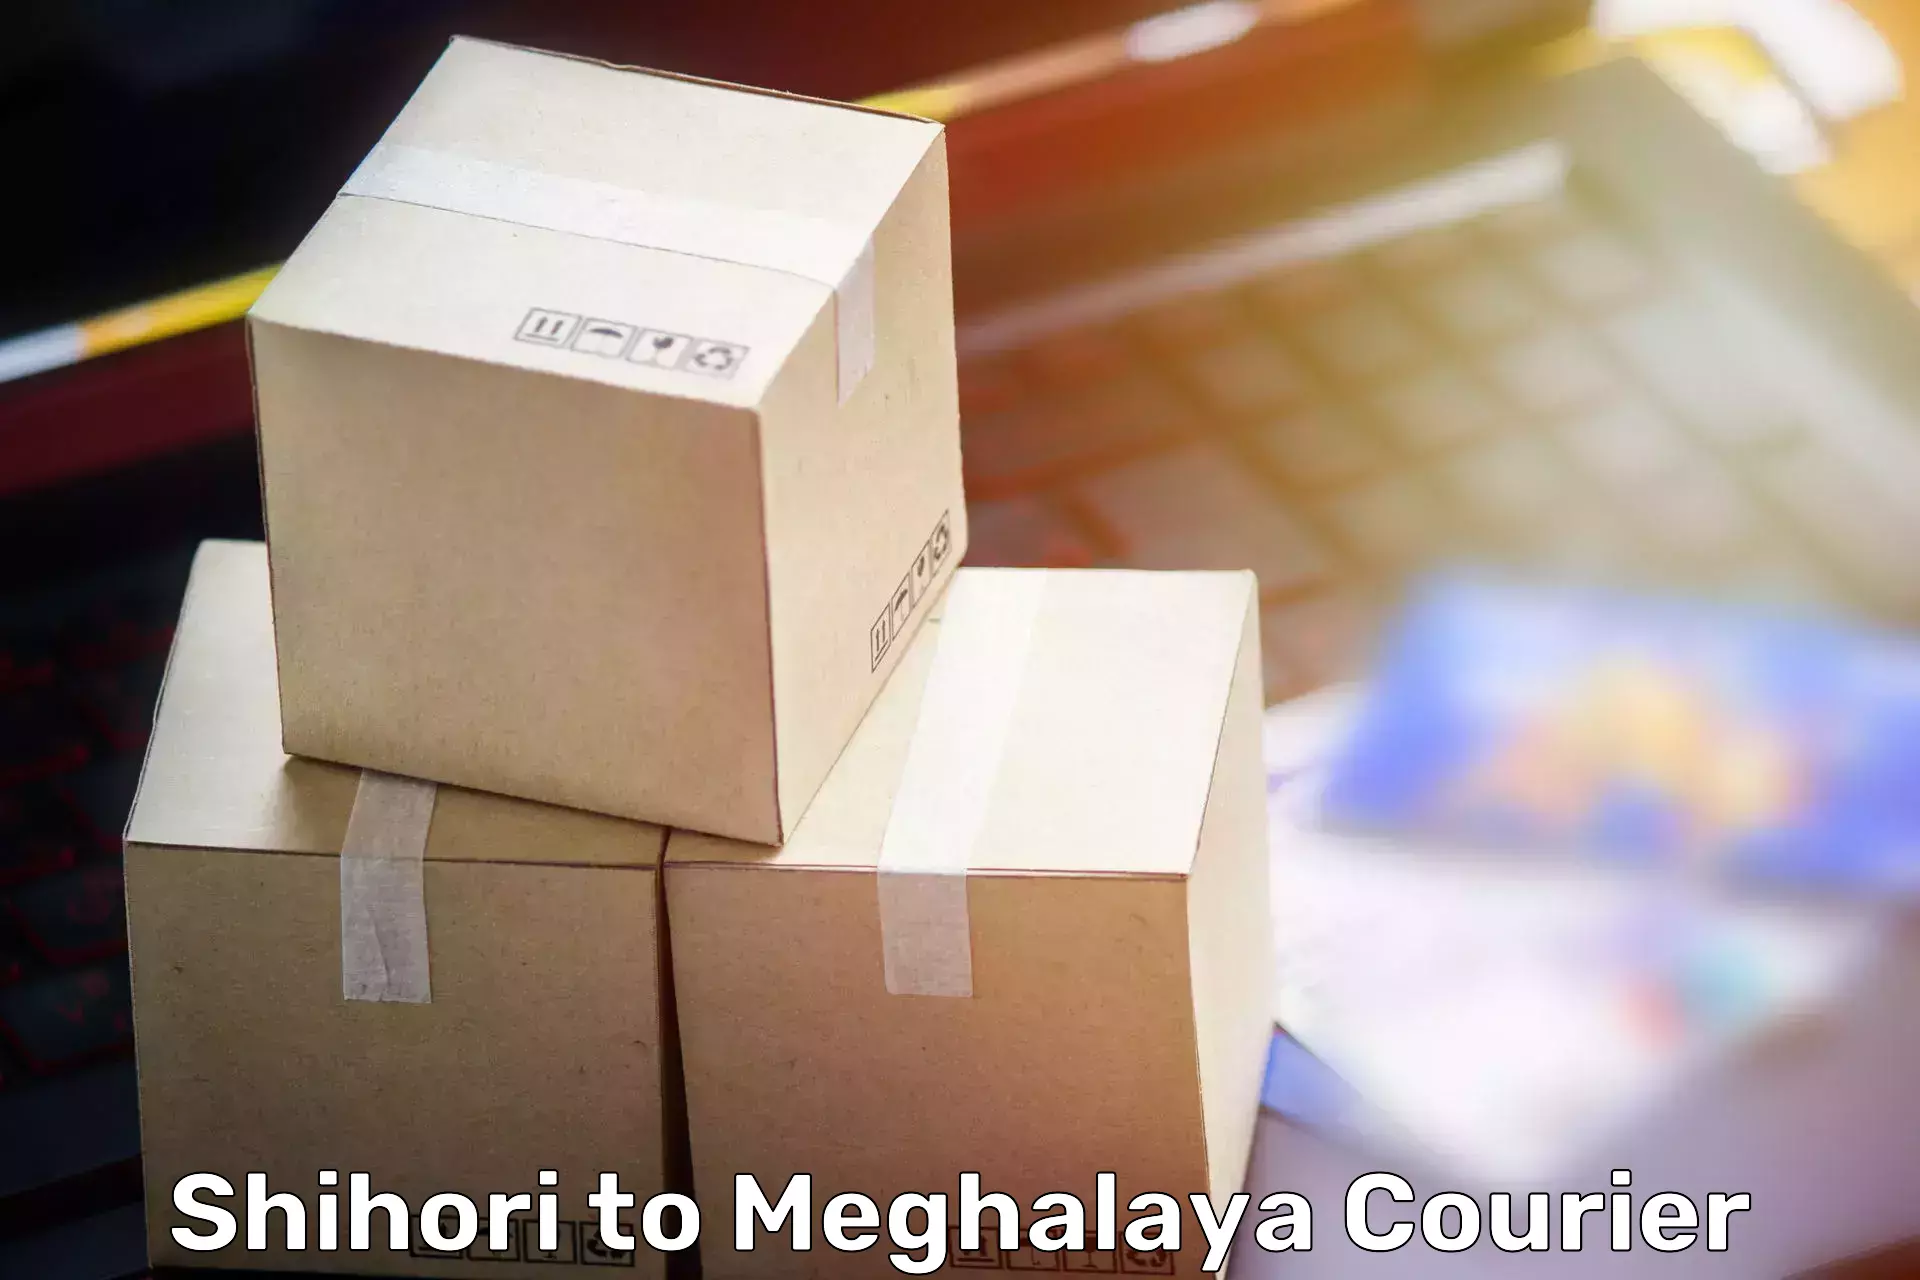 Furniture moving specialists Shihori to Meghalaya